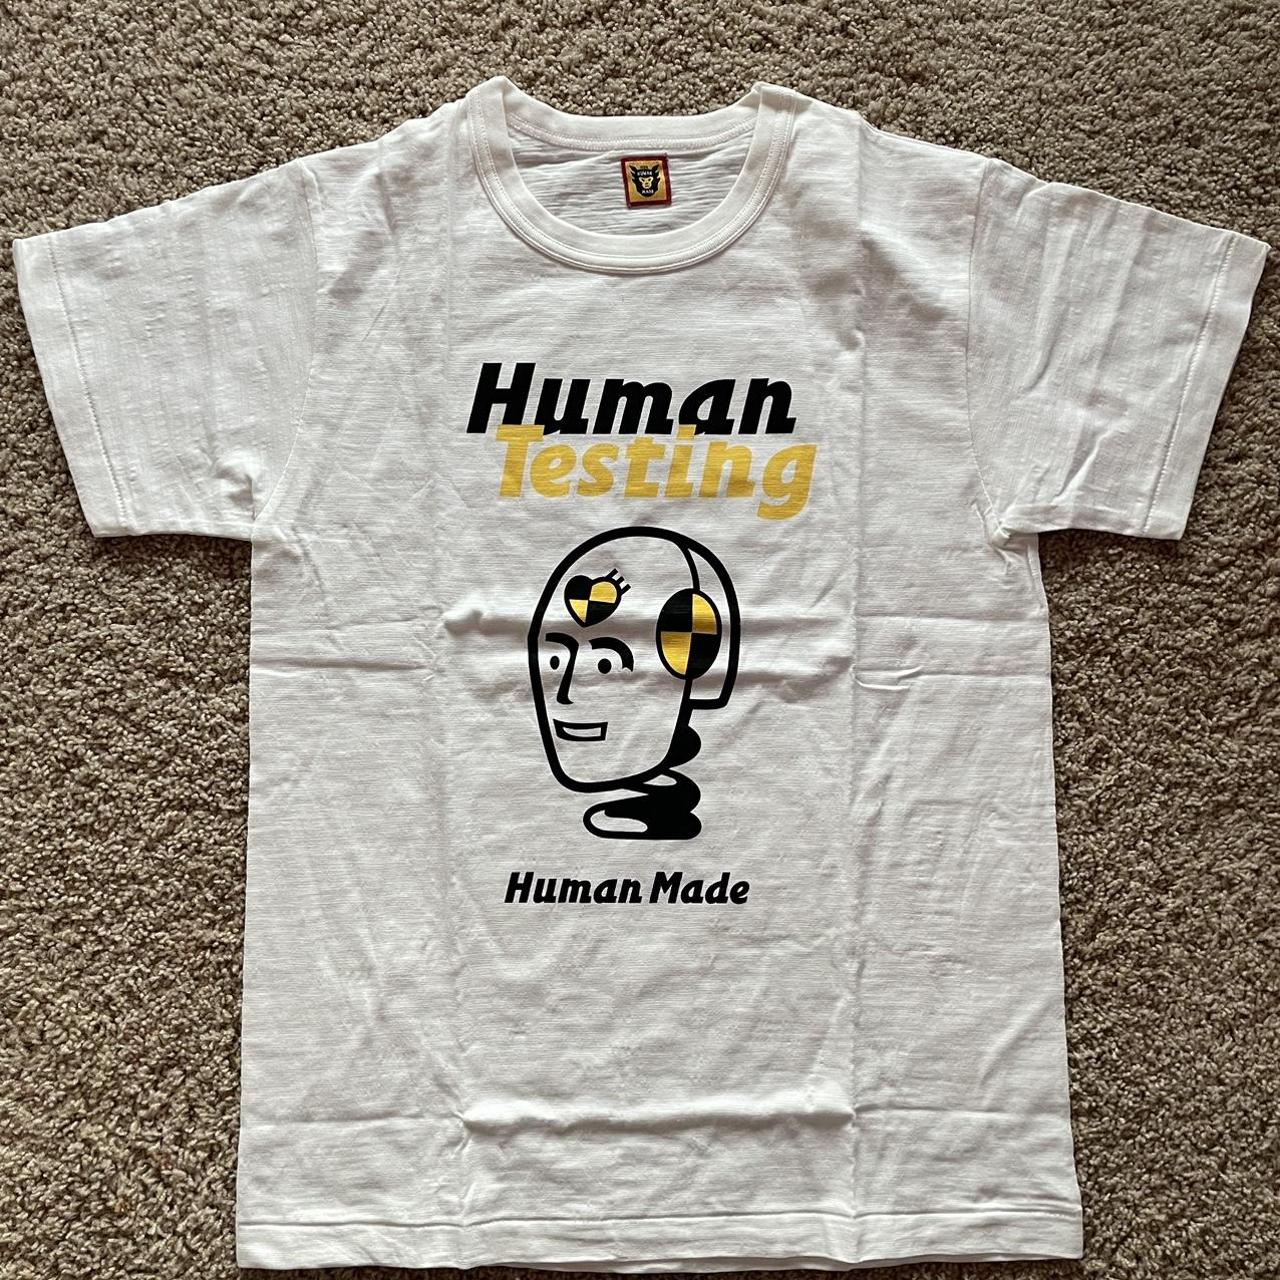 Human Made Men's Black and White T-shirt